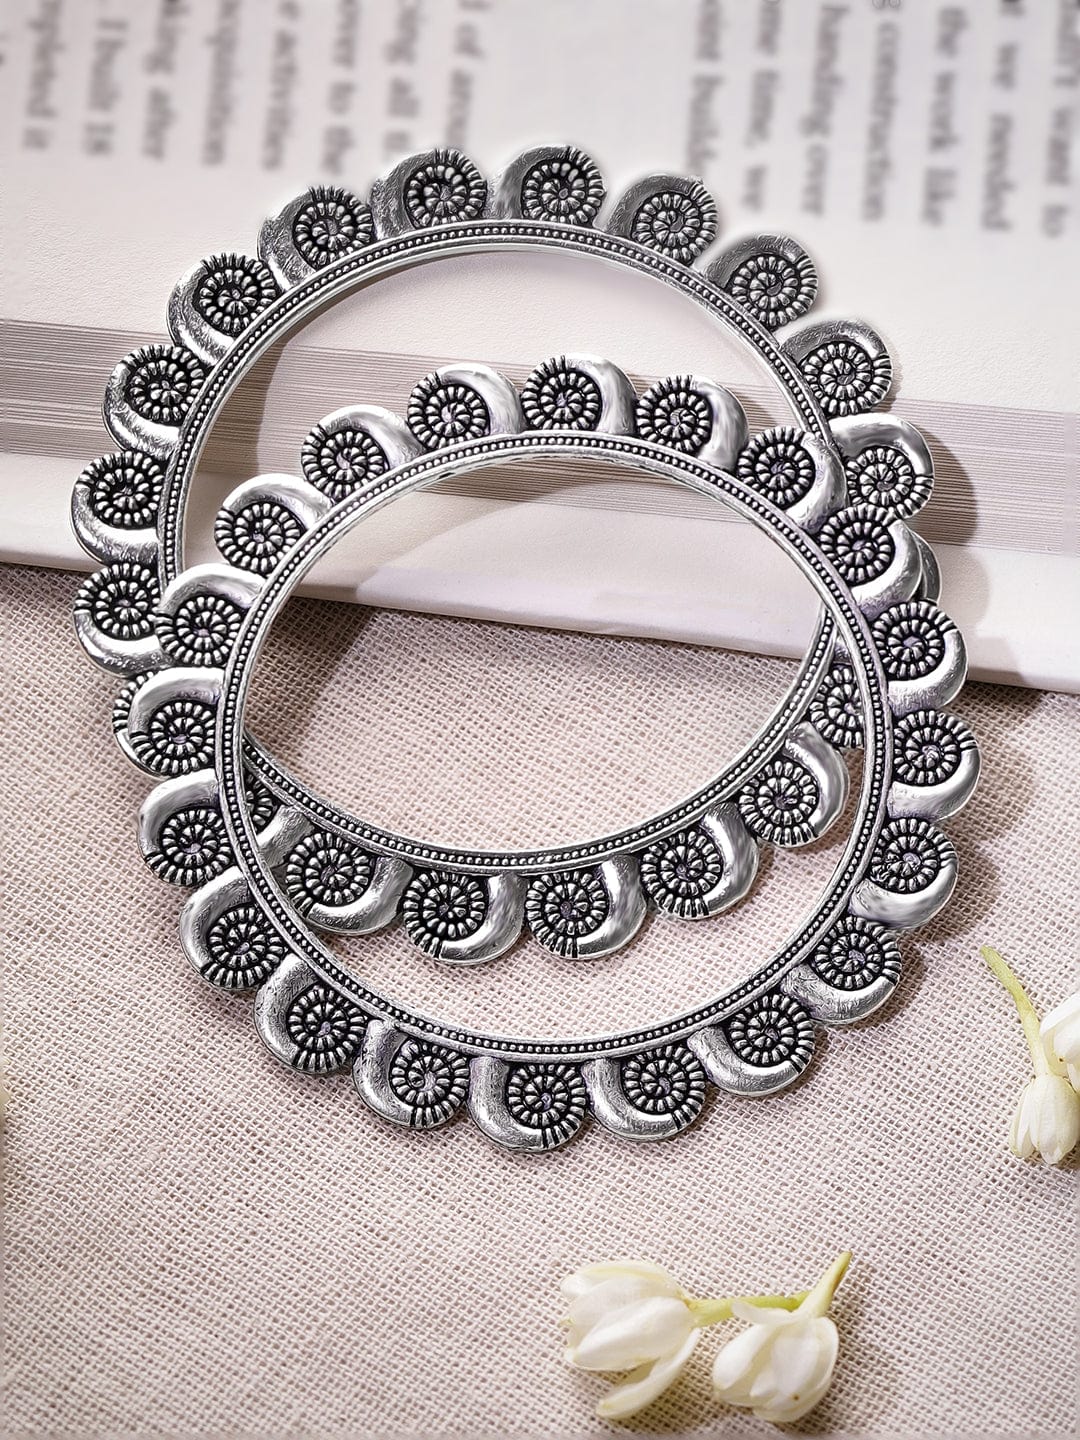 Rubans Set of 2 Artisan-Crafted Oxidized Silver plated Bangles Bangles & Bracelets